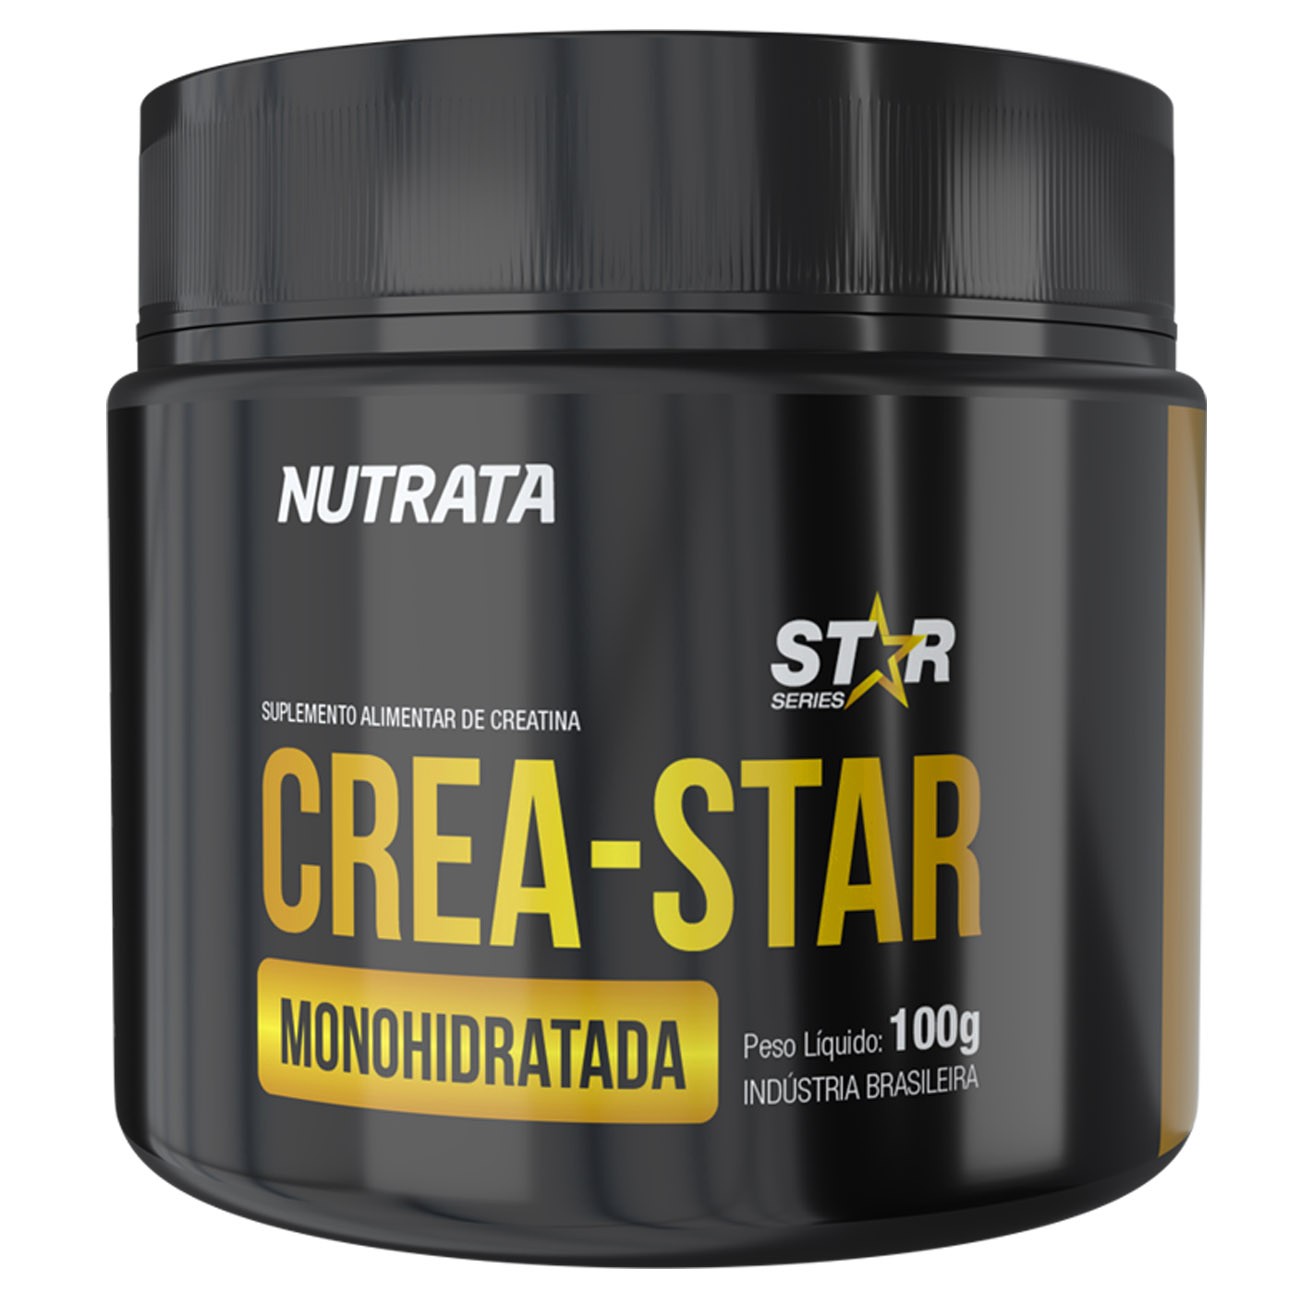 Creatina Crea-Star Star Series 100g - Nutrata